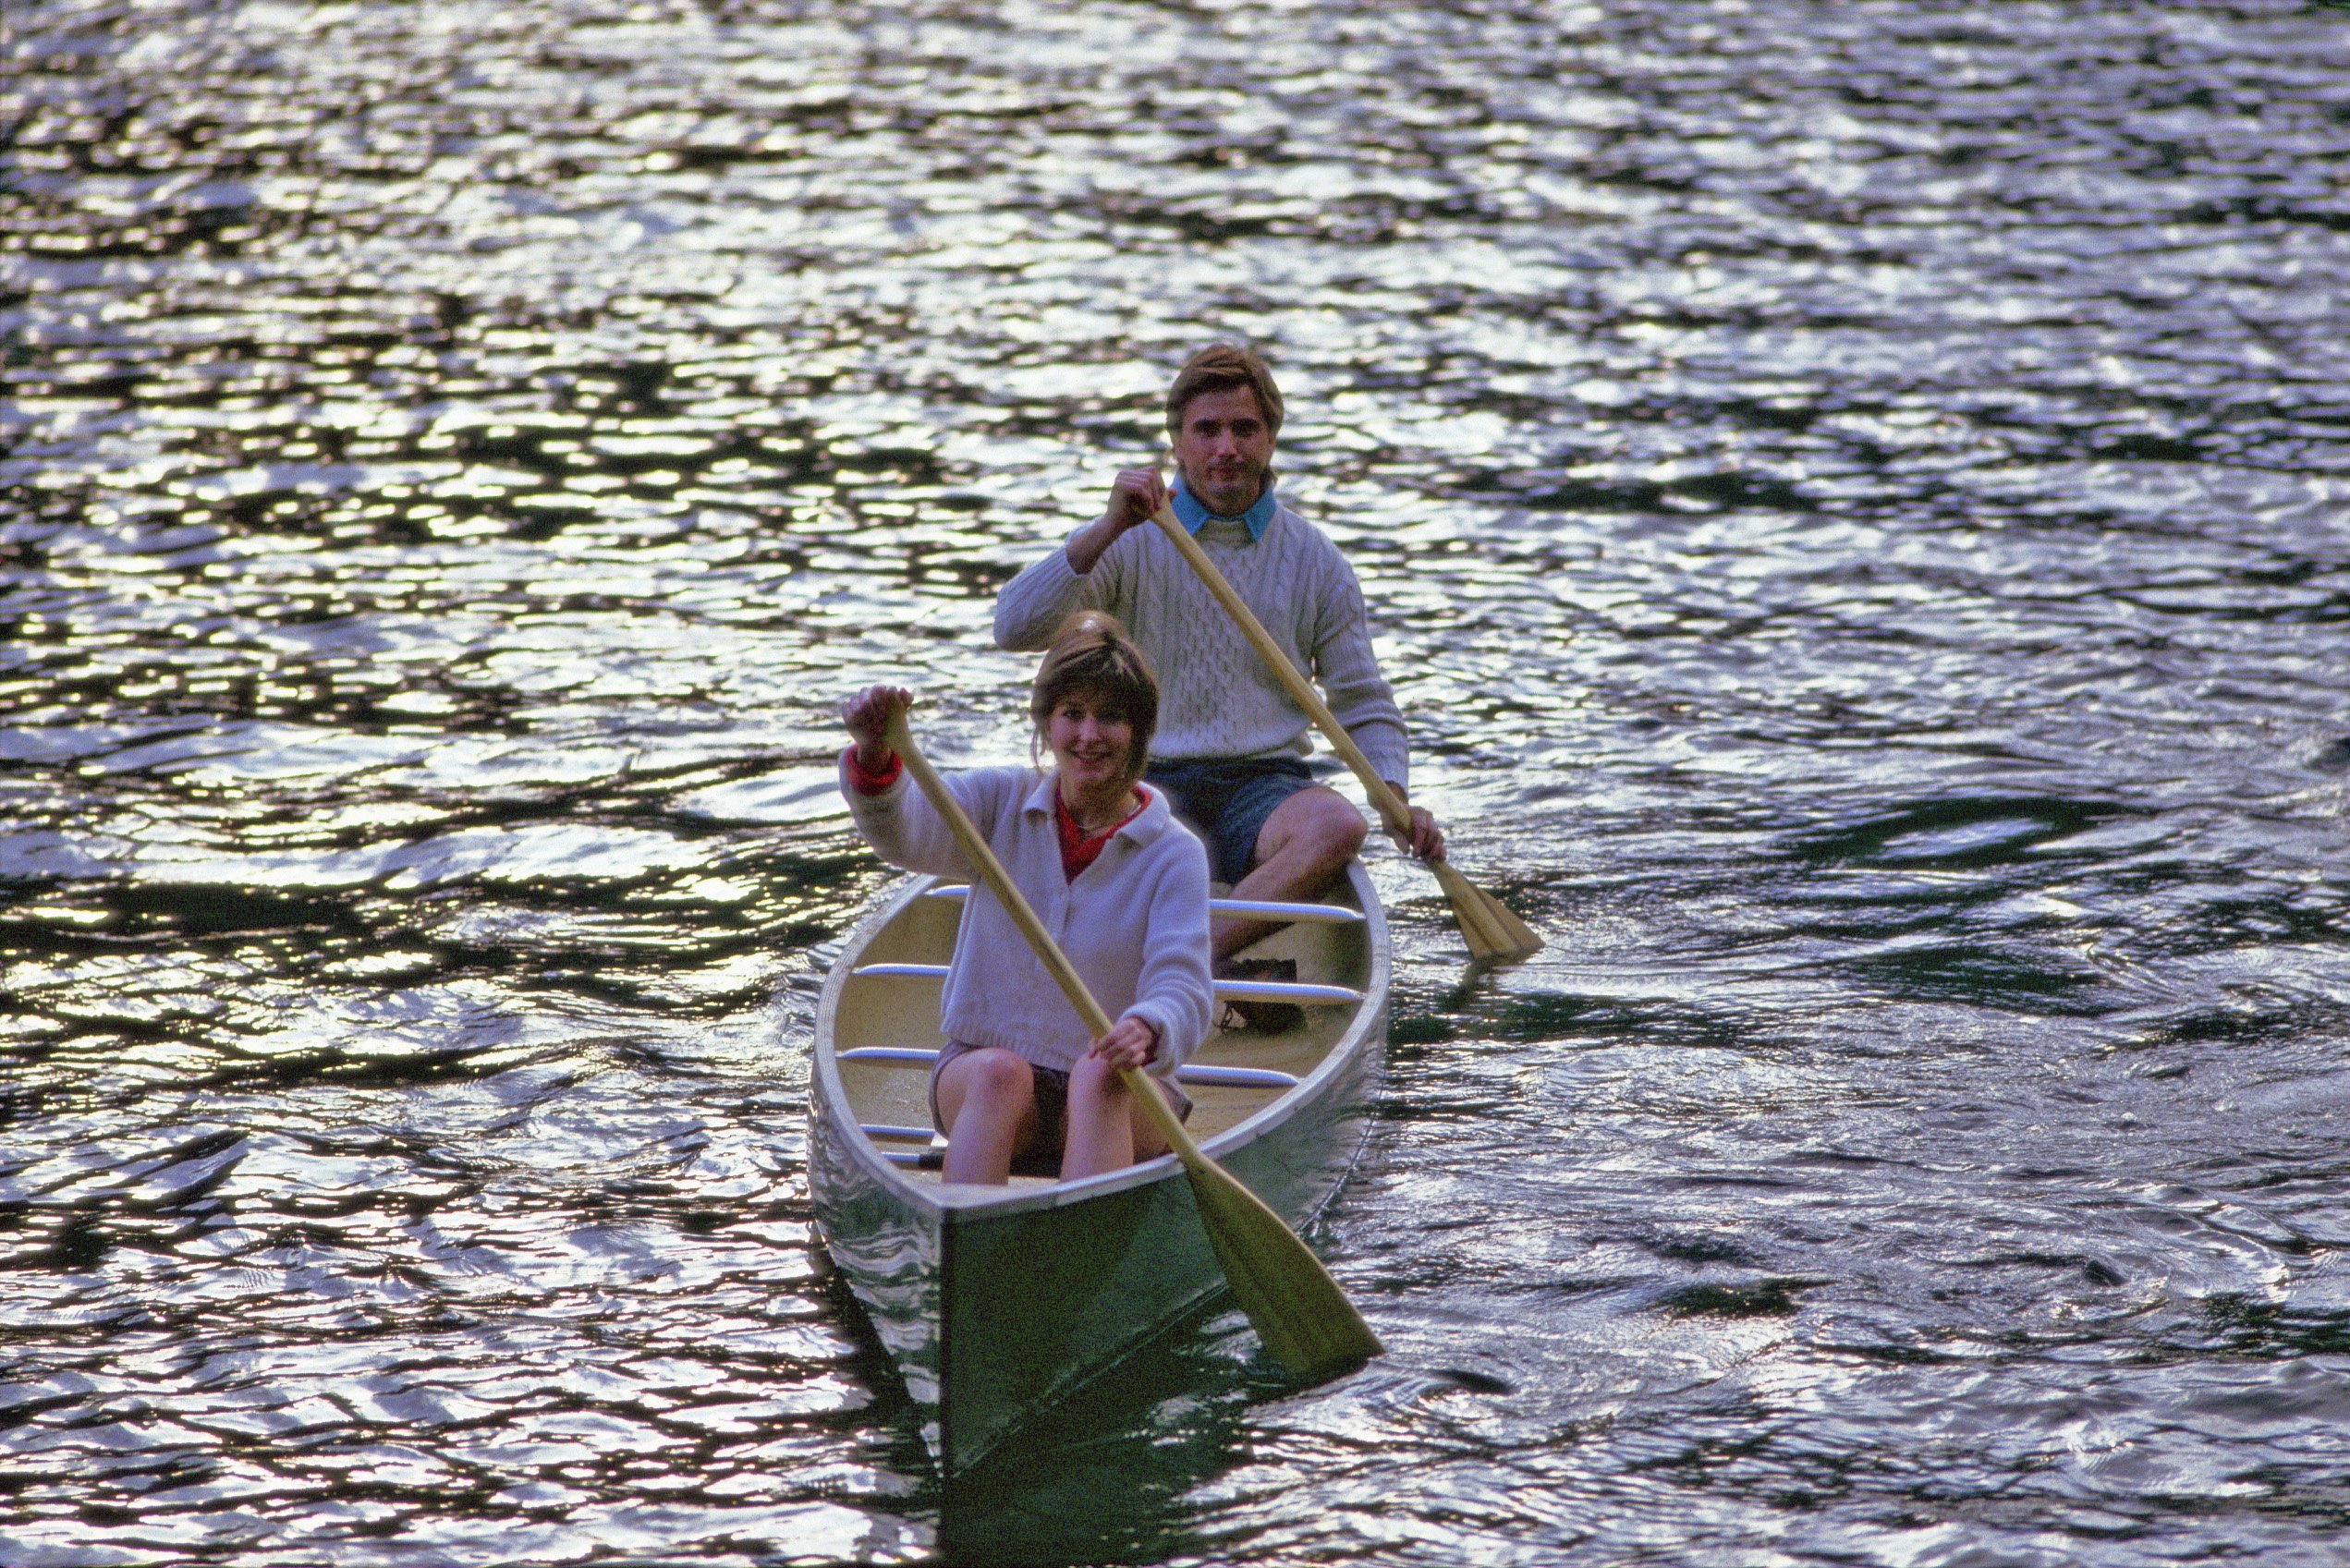 Couple canoeing